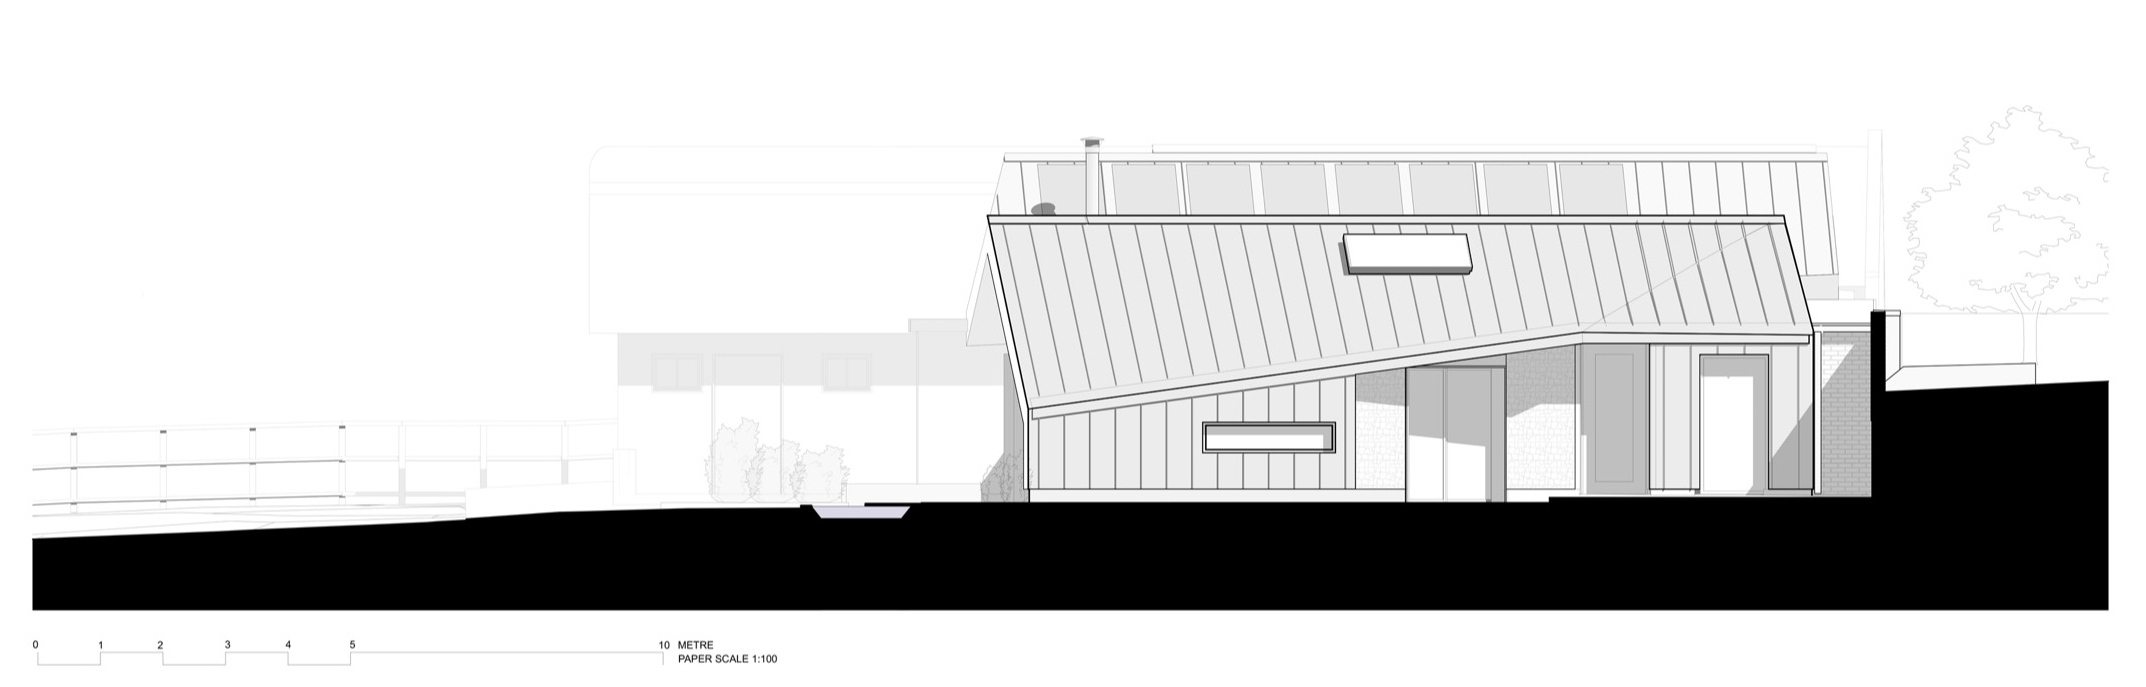 Architecture elevation drawing of zinc roof | cdc studio cambridge architects